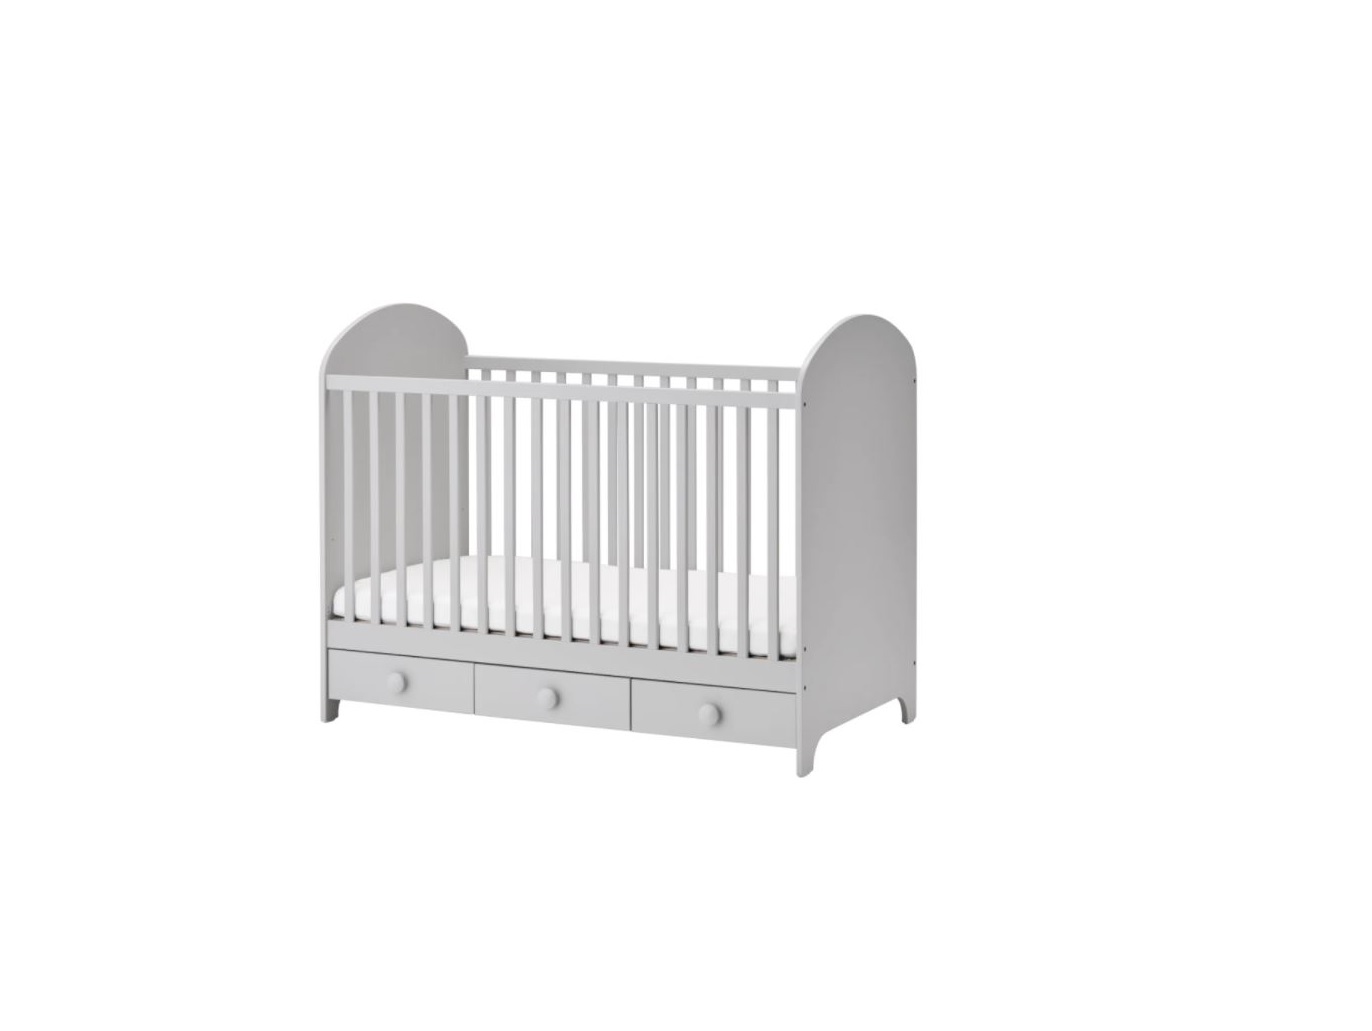 IKEA Baby sleep Cots User Guide